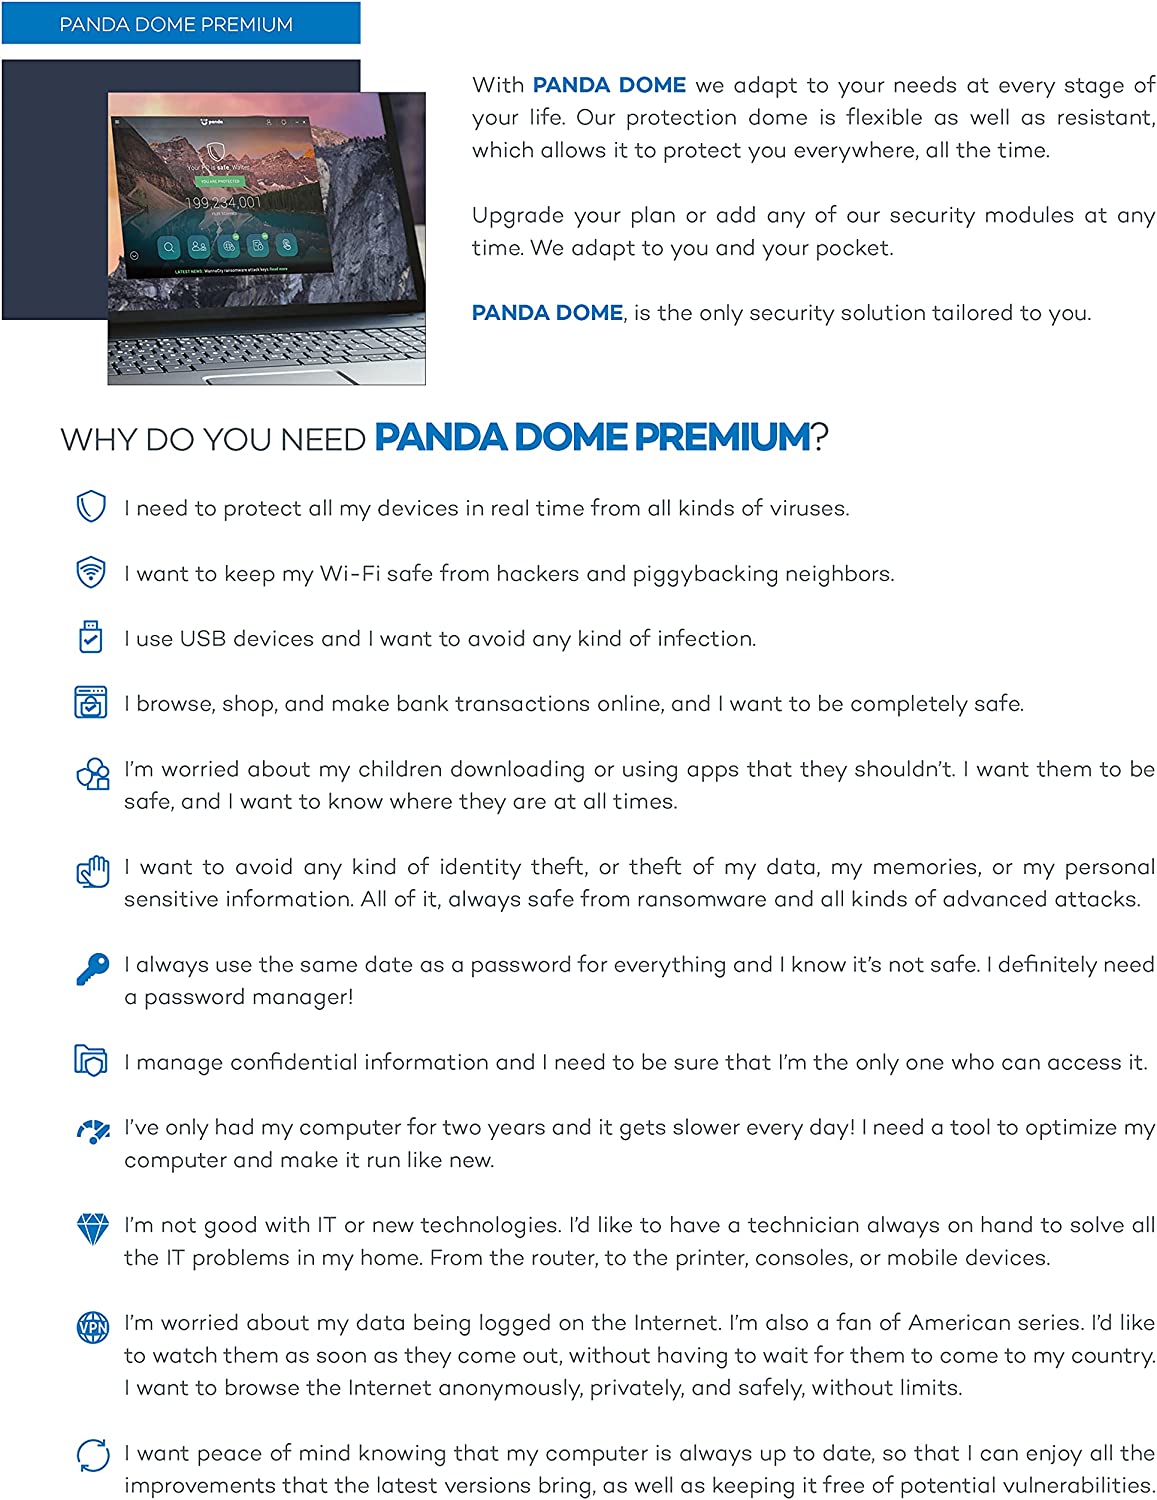 WatchGuard Panda Dome Premium - 1 Year - 10 Licenses (WGDOP041)